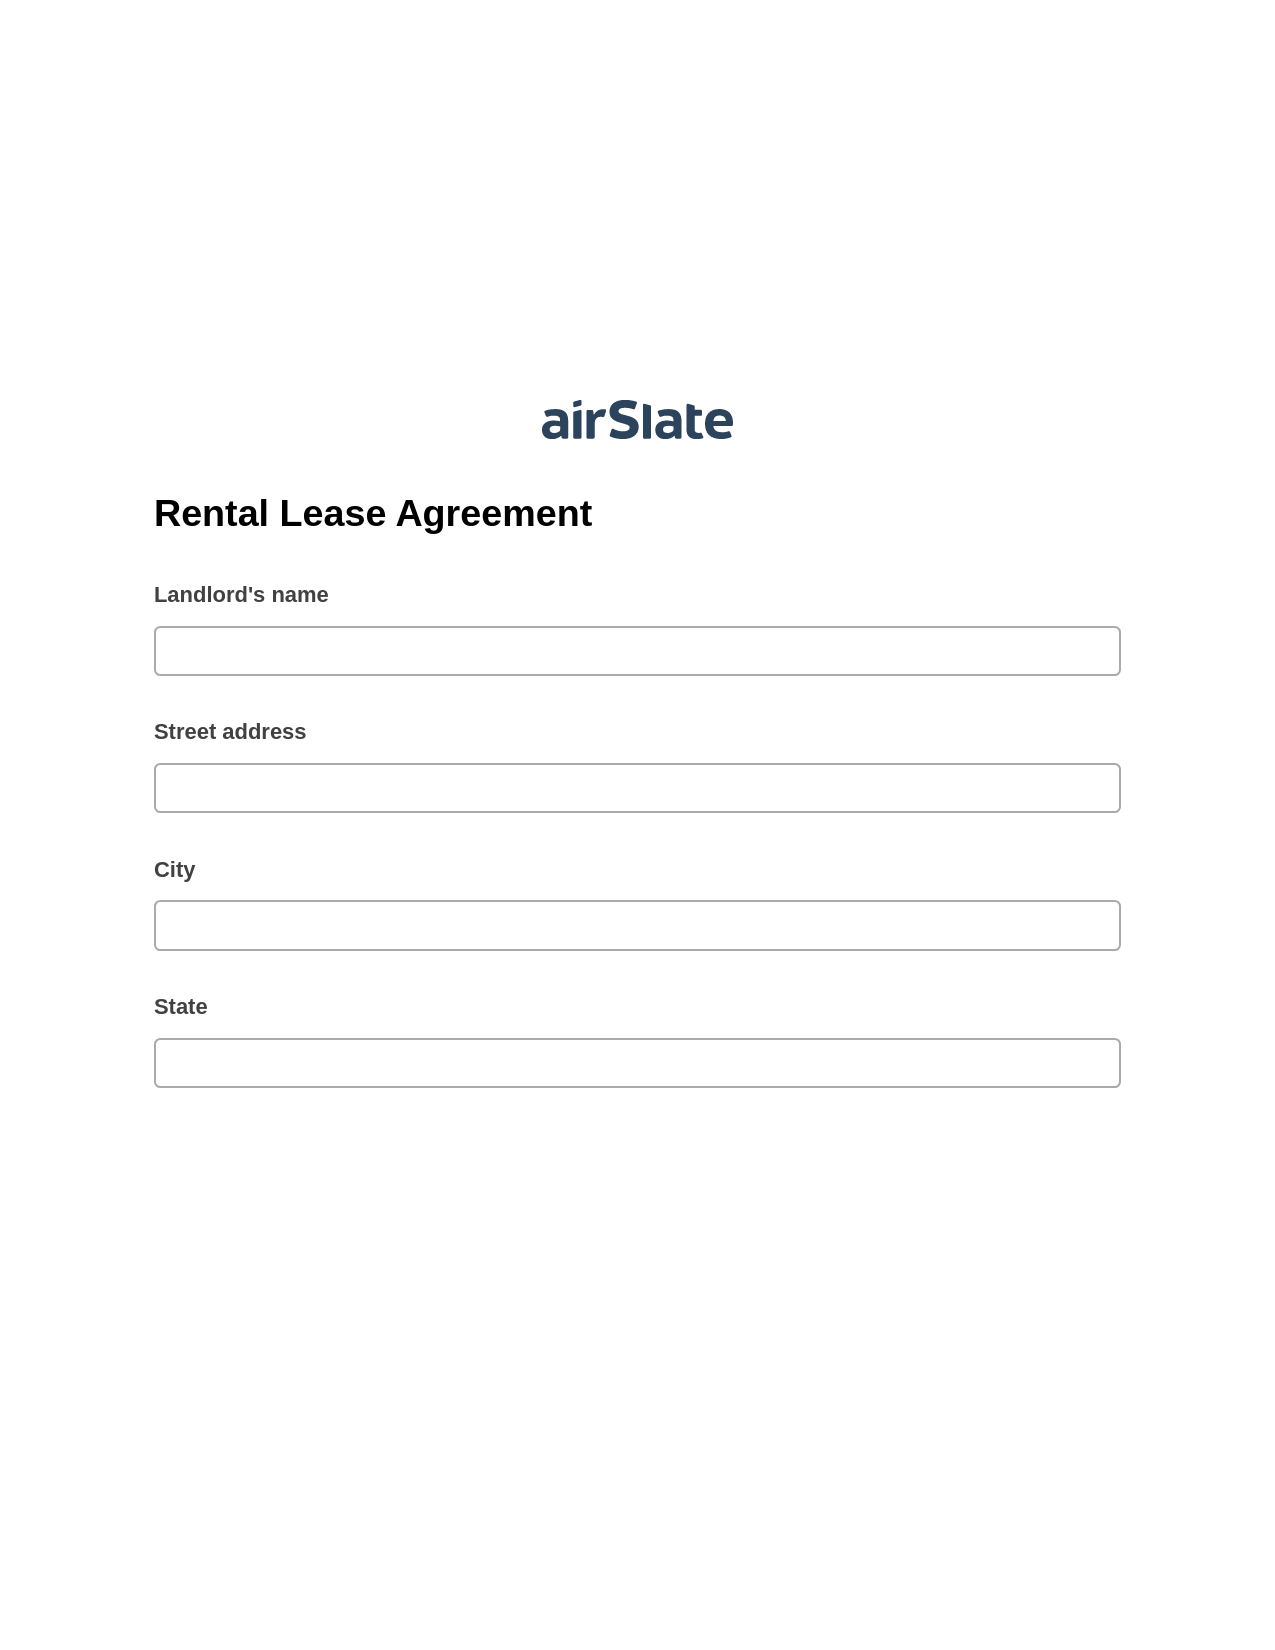 Rental Lease Agreement Pre-fill from MySQL Dropdown Options Bot, Invoke Salesforce Process Bot, Google Drive Bot